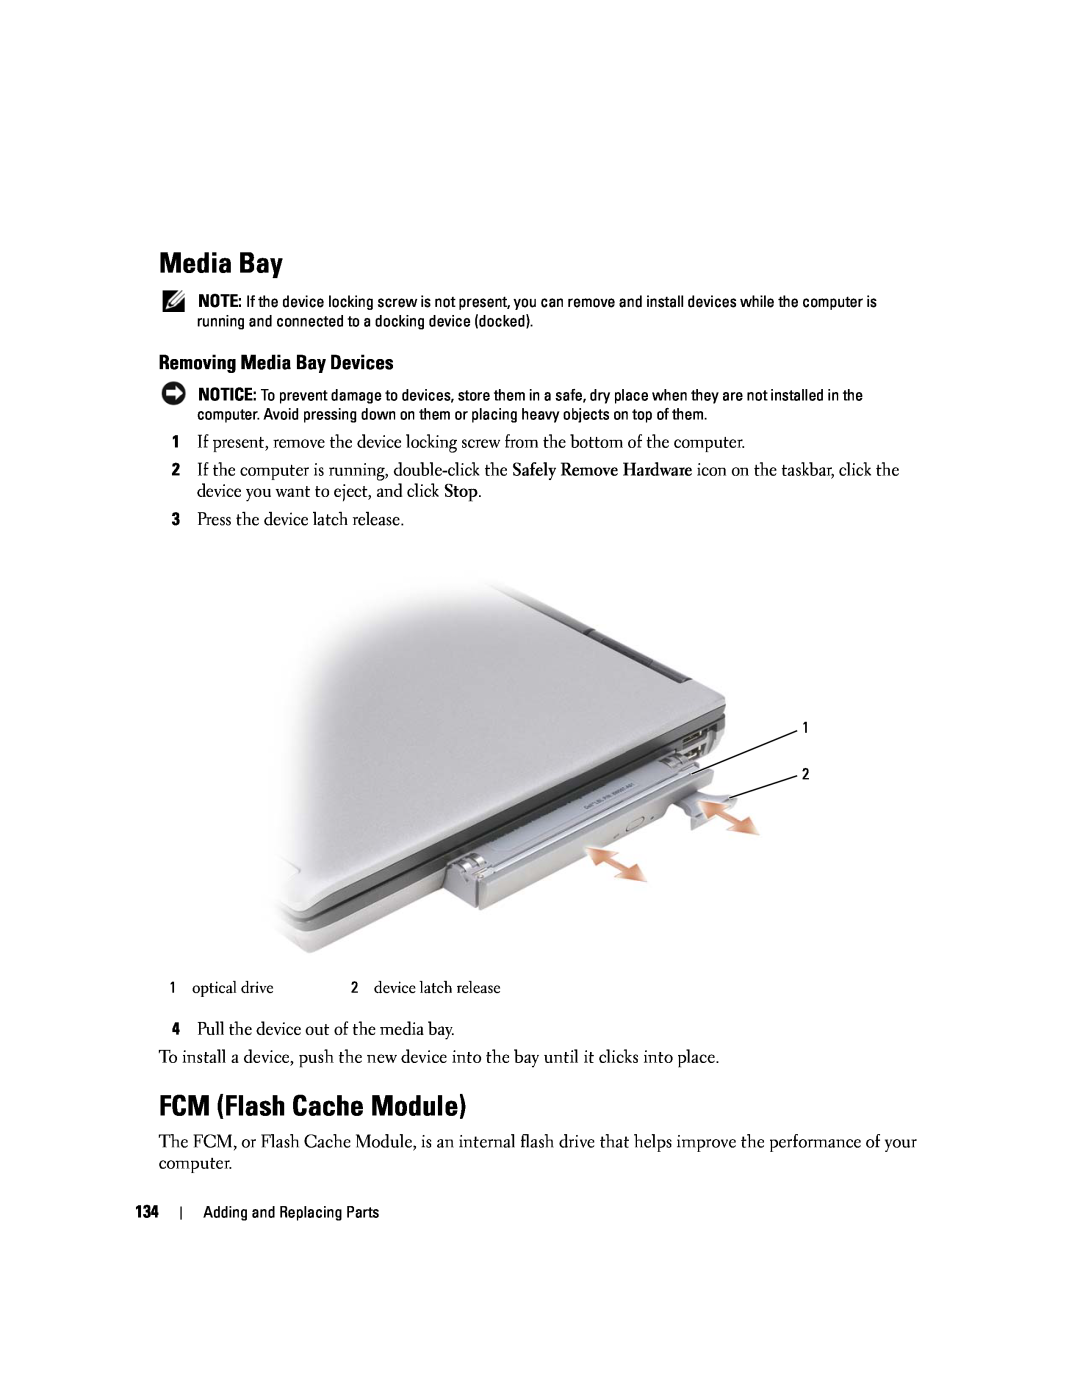 Dell PP24L manual FCM Flash Cache Module, Removing Media Bay Devices 